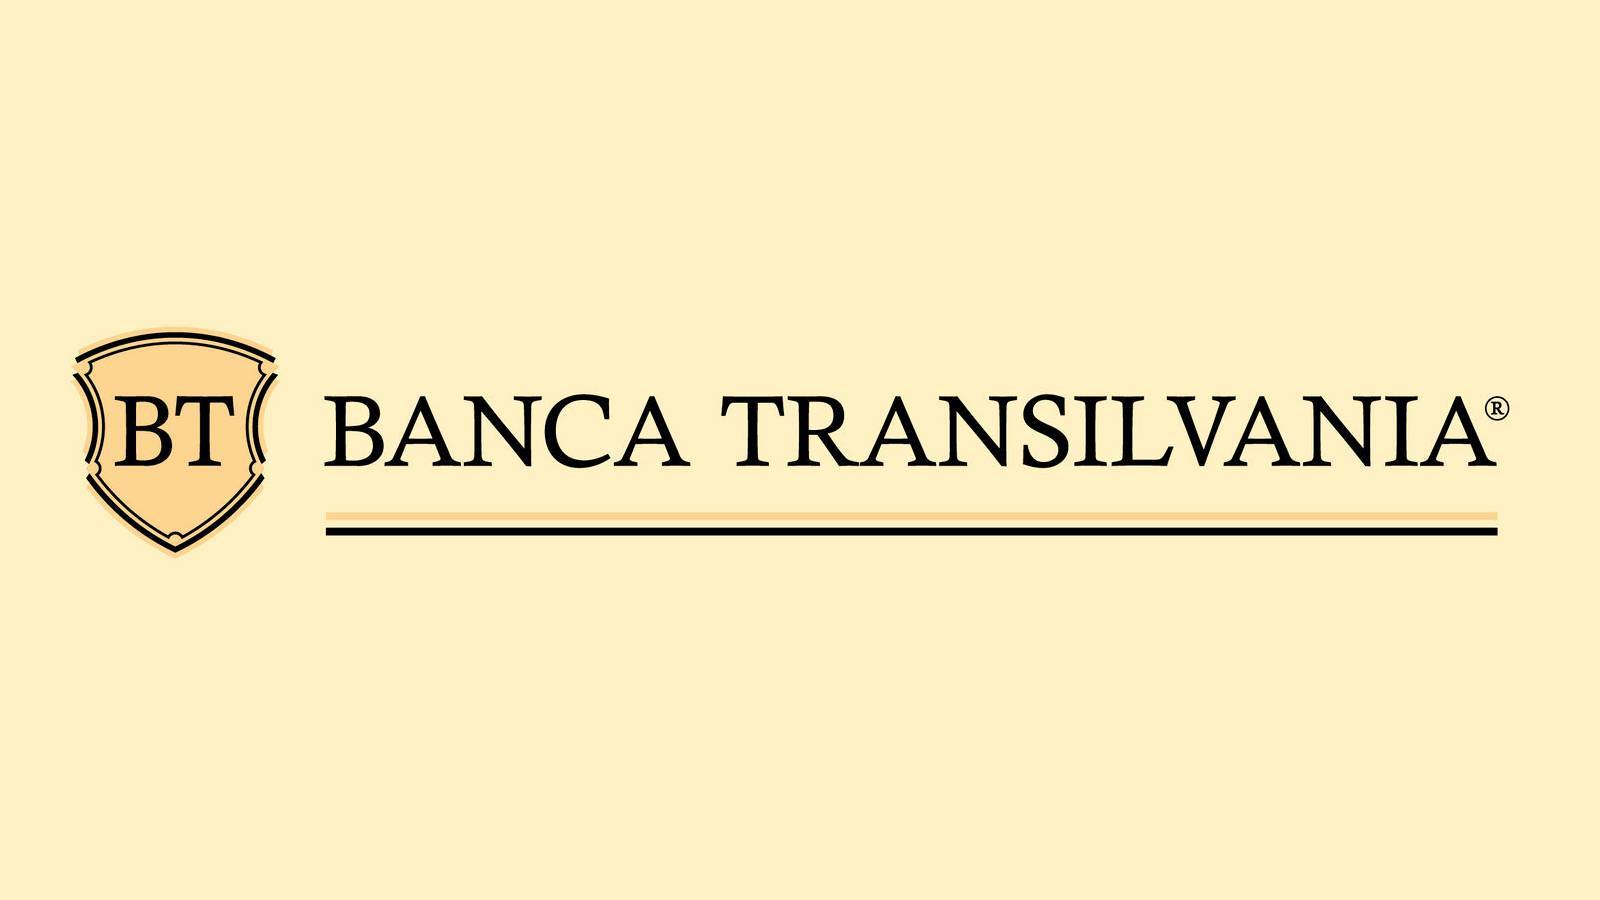 BANCA Transilvania Information SISTA MOMENTET GRATIS Kunder